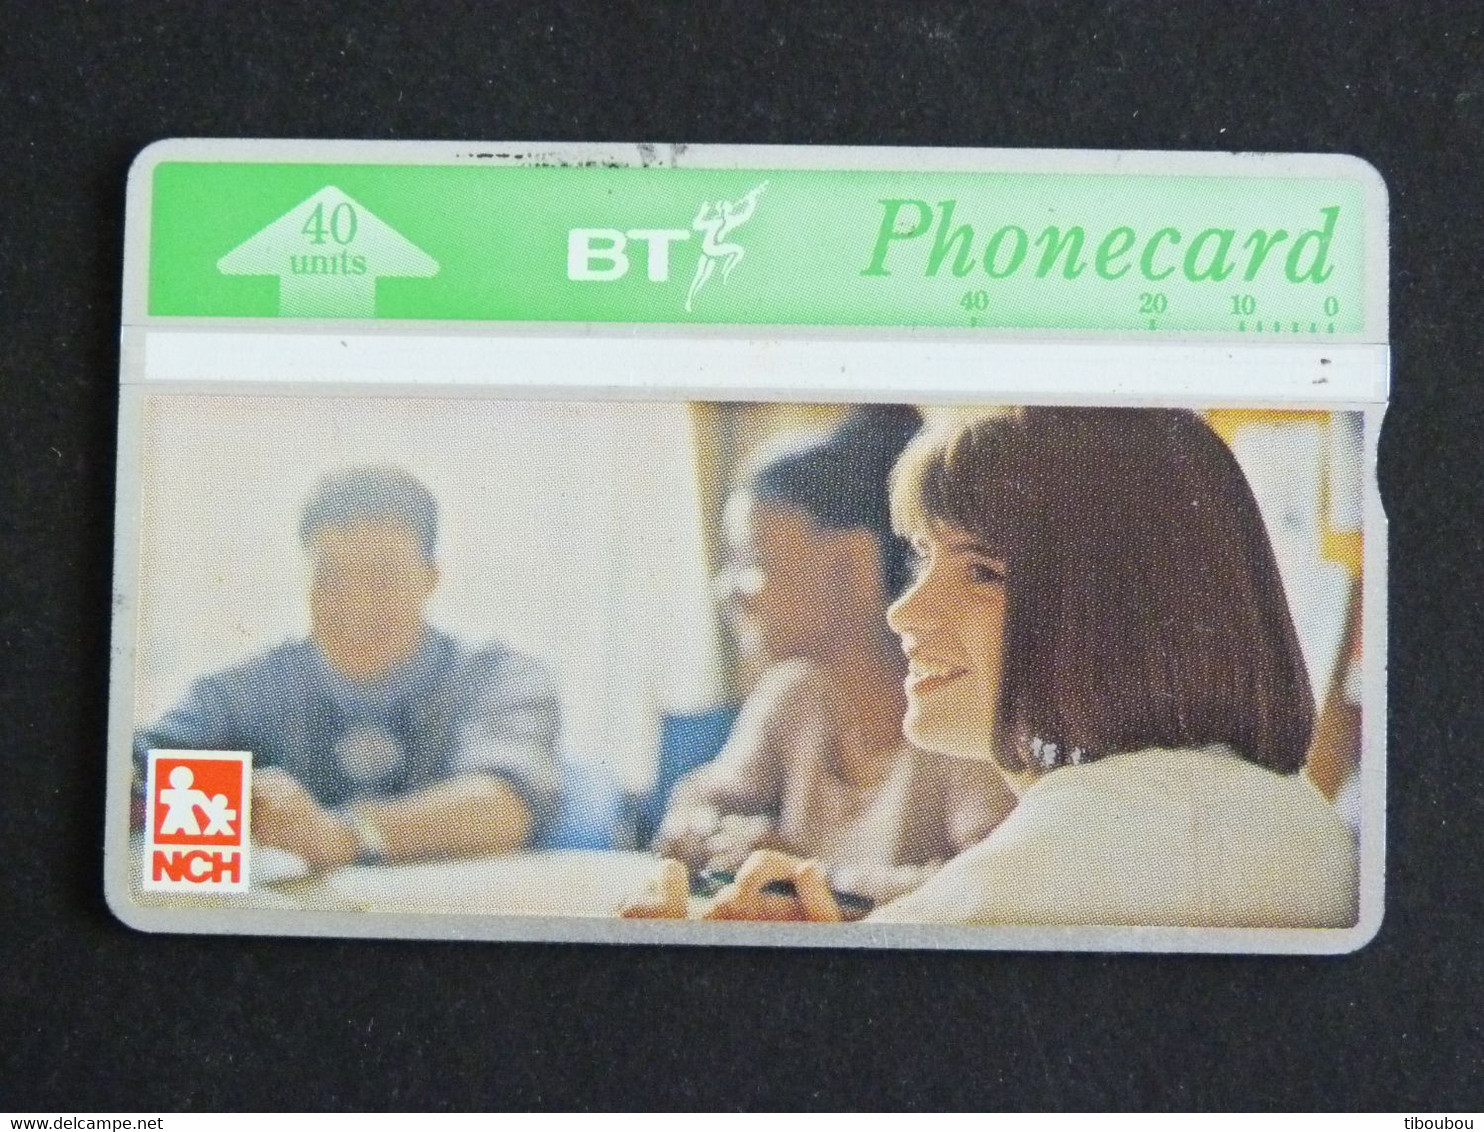 TELECARTE BRITISH TELECOM PHONECARD 40 UNITS - NCH - BT Edición Conmemorativa